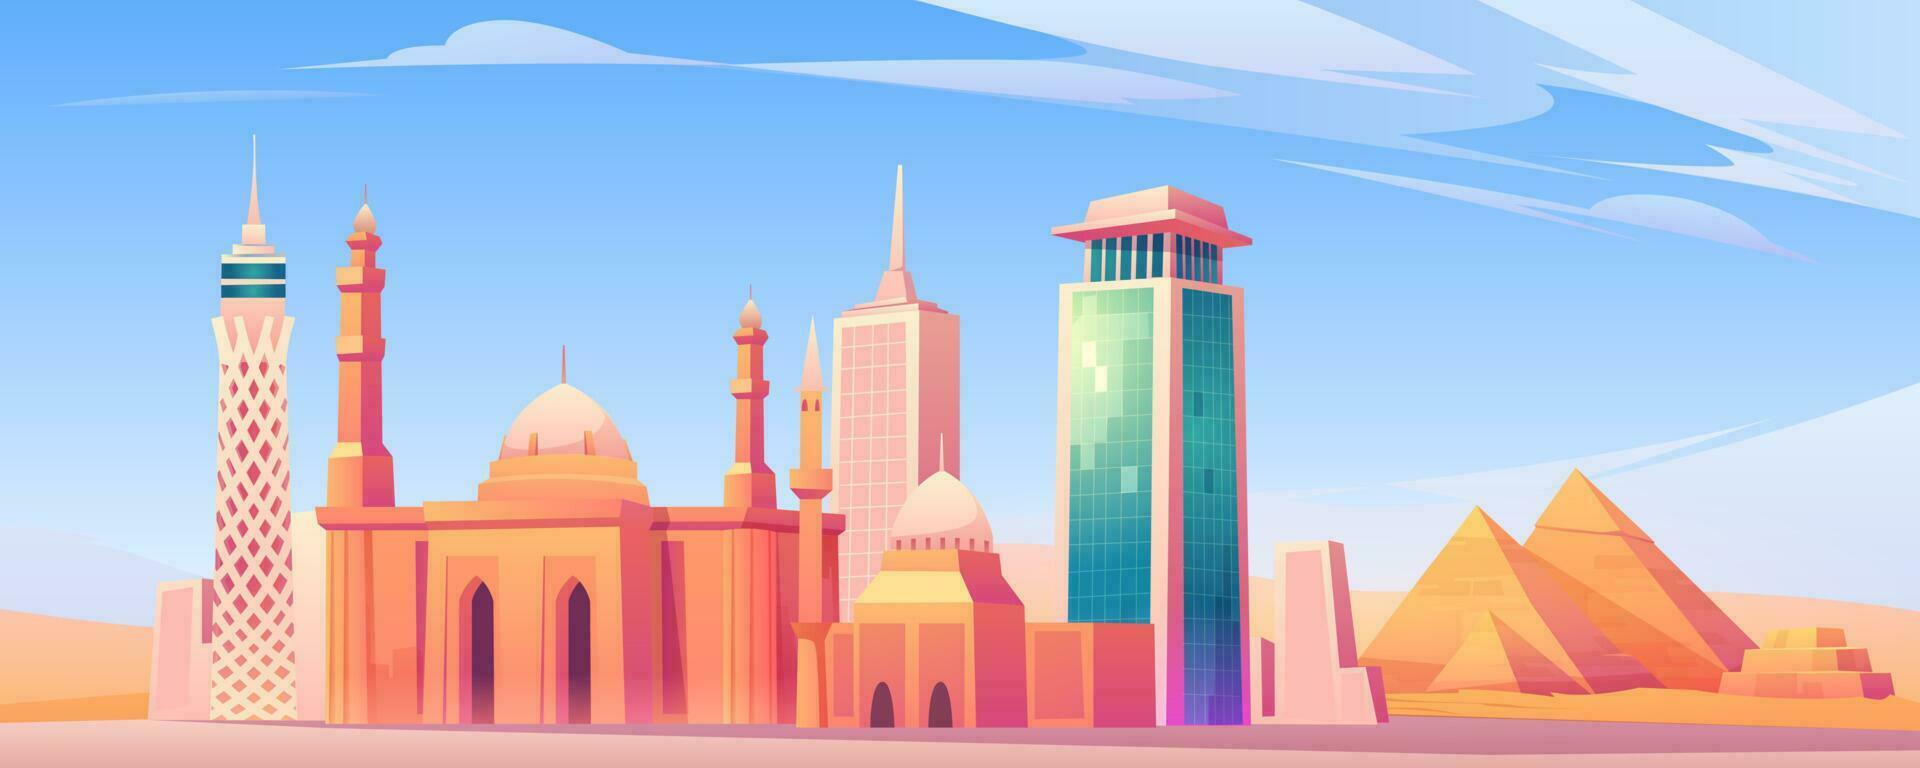 Ägypten Sehenswürdigkeiten, Kairo Stadt Horizont Handy, Mobiltelefon Bildschirm vektor